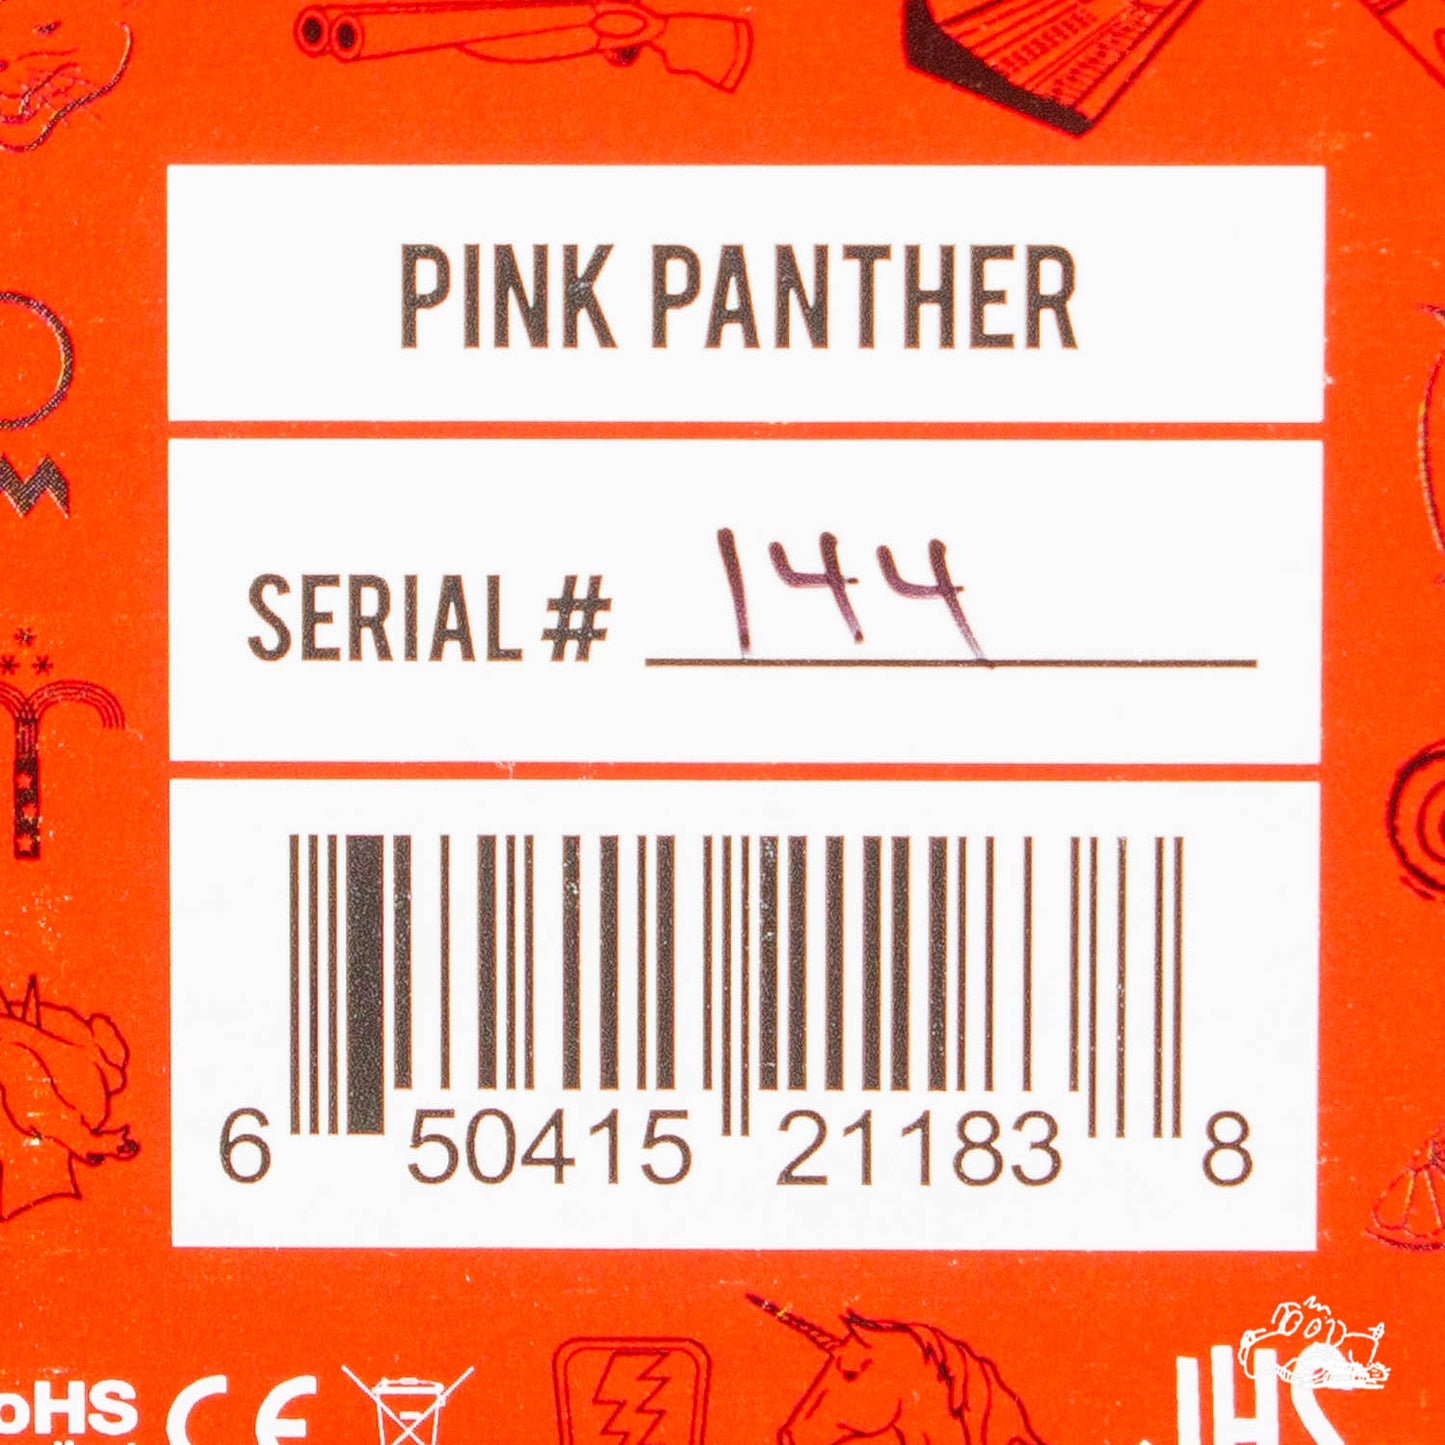 JHS Pink Panther